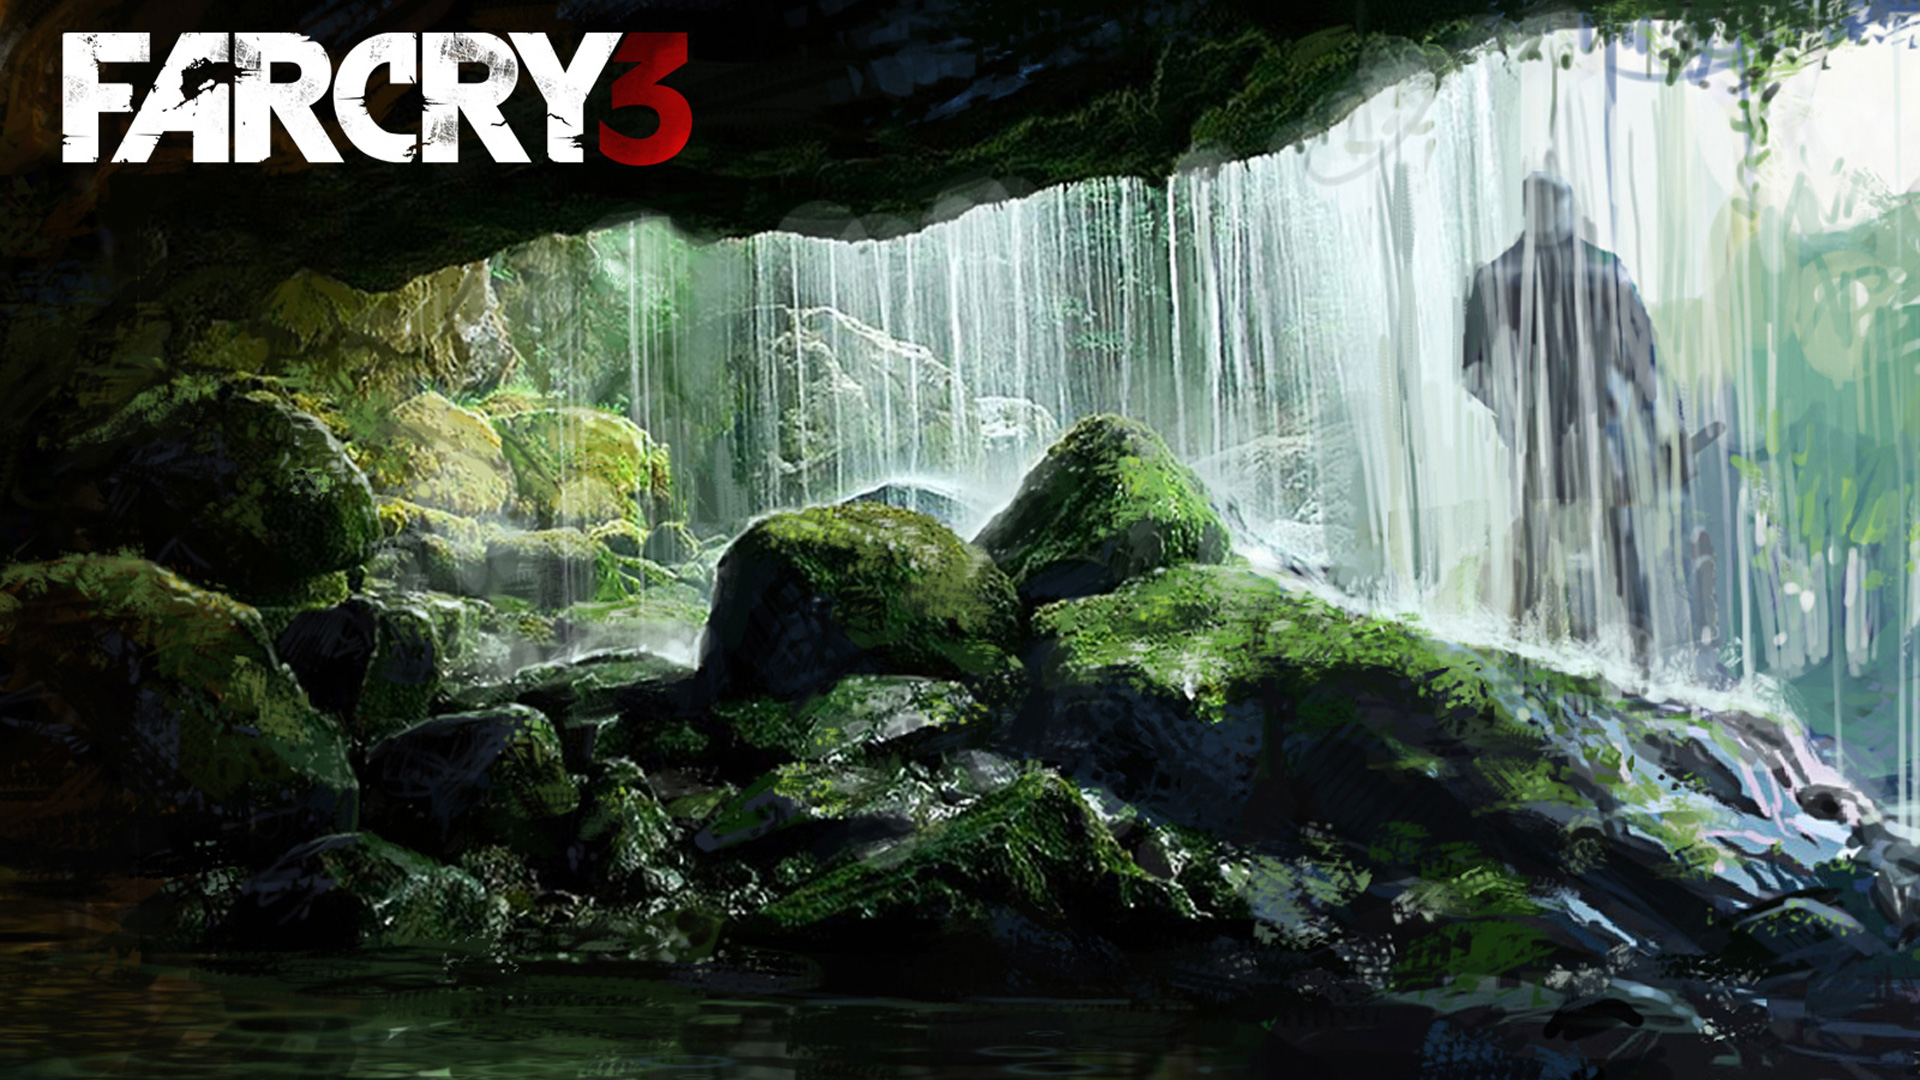 Wallpaper 10 Wallpaper From Far Cry 3 Gamepressurecom